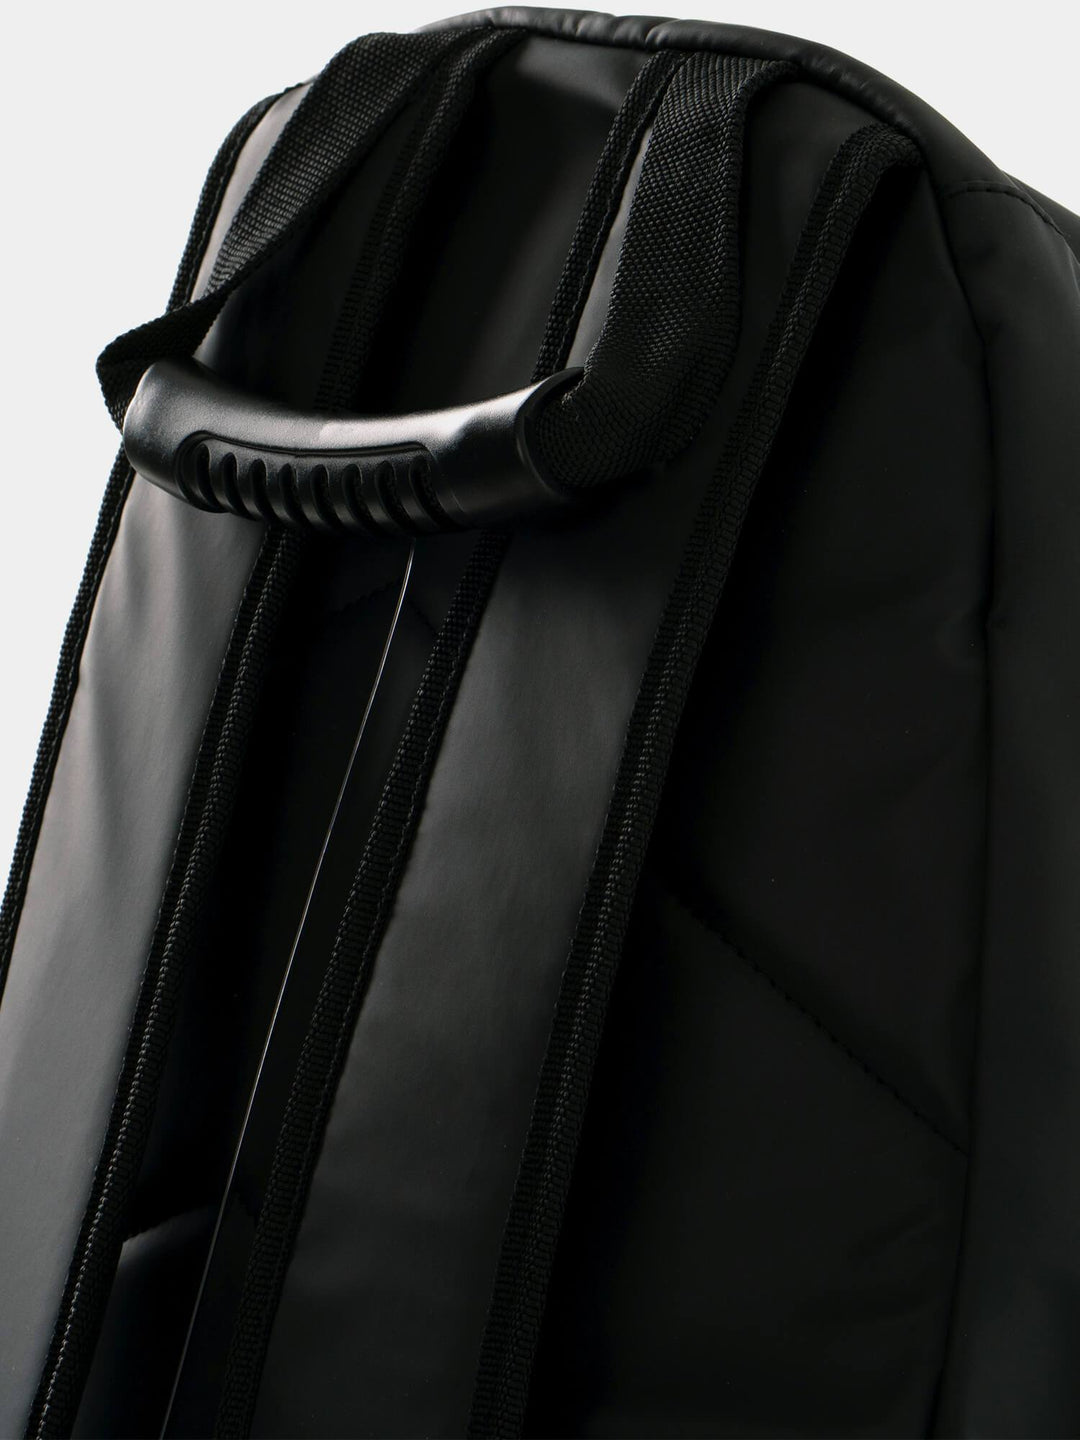 RW Backpack - Black Accessories Ryderwear 